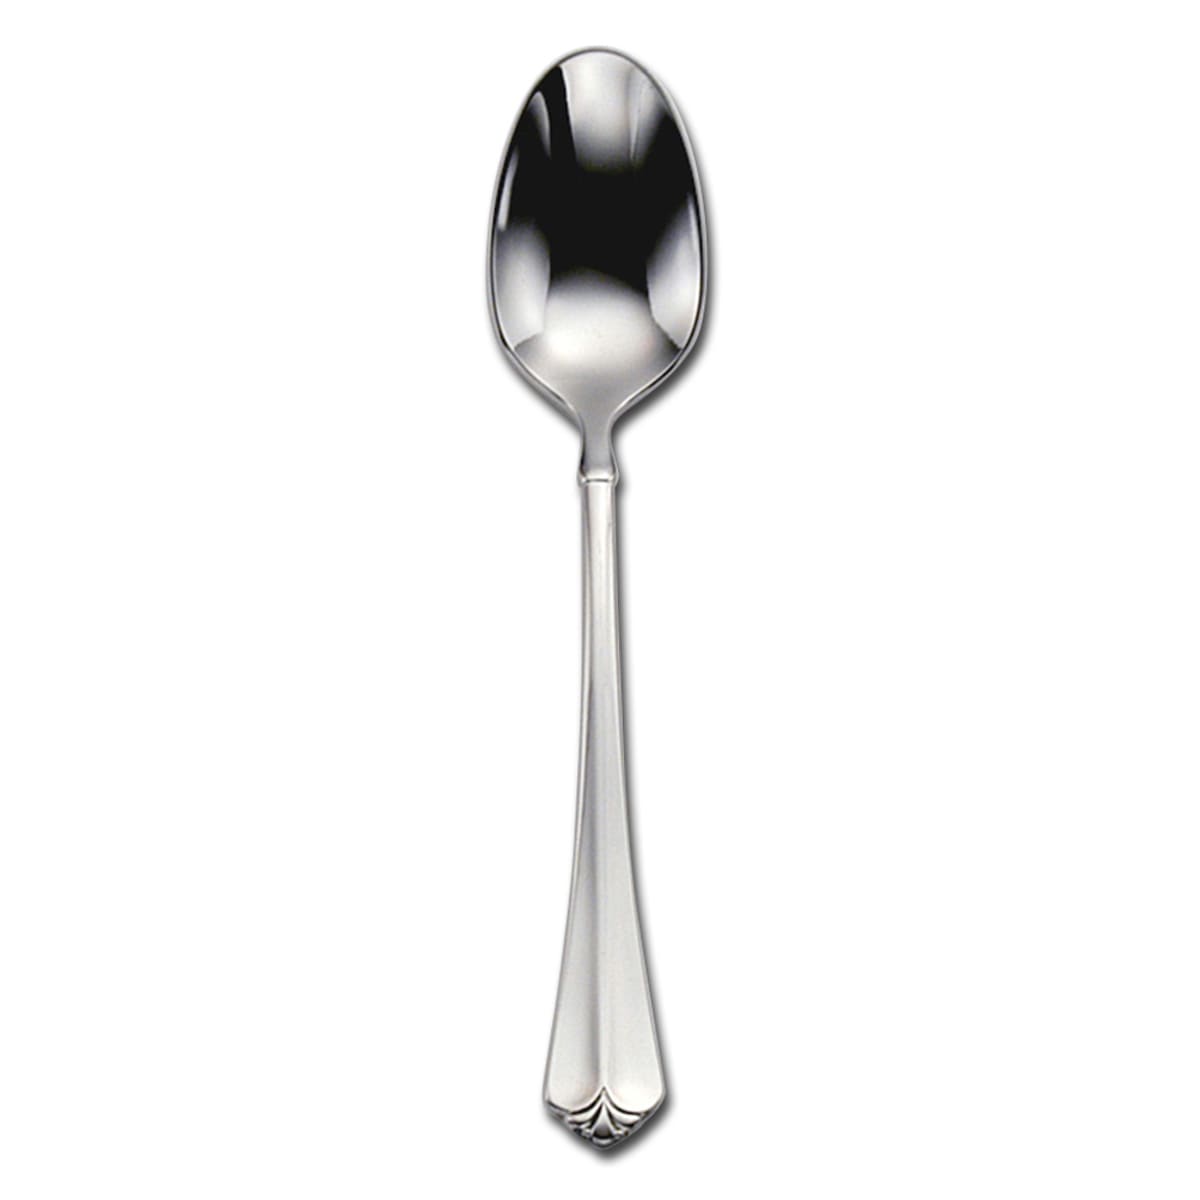 Oneida Juilliard 18/10 Stainless Steel Tablespoon/Serving Spoons (Set of 12)